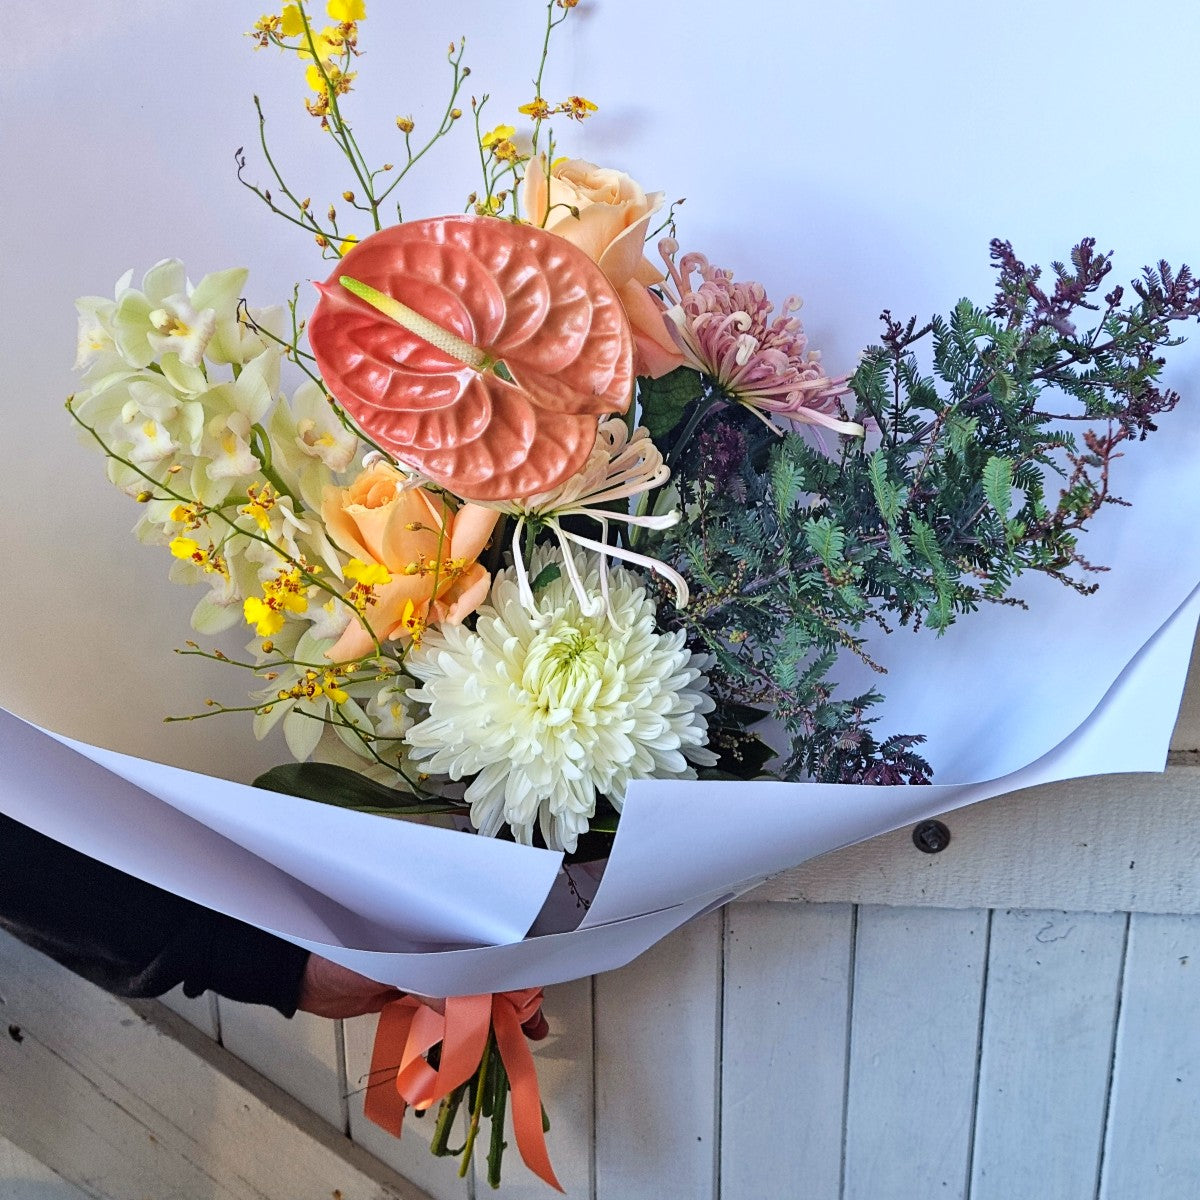 Artificial Flowers, Simulati Centerpieces with Small Ceramic Vase Silk  Cloth Floral Arrangement for Decor Festival Garden Wedding Deskp White 